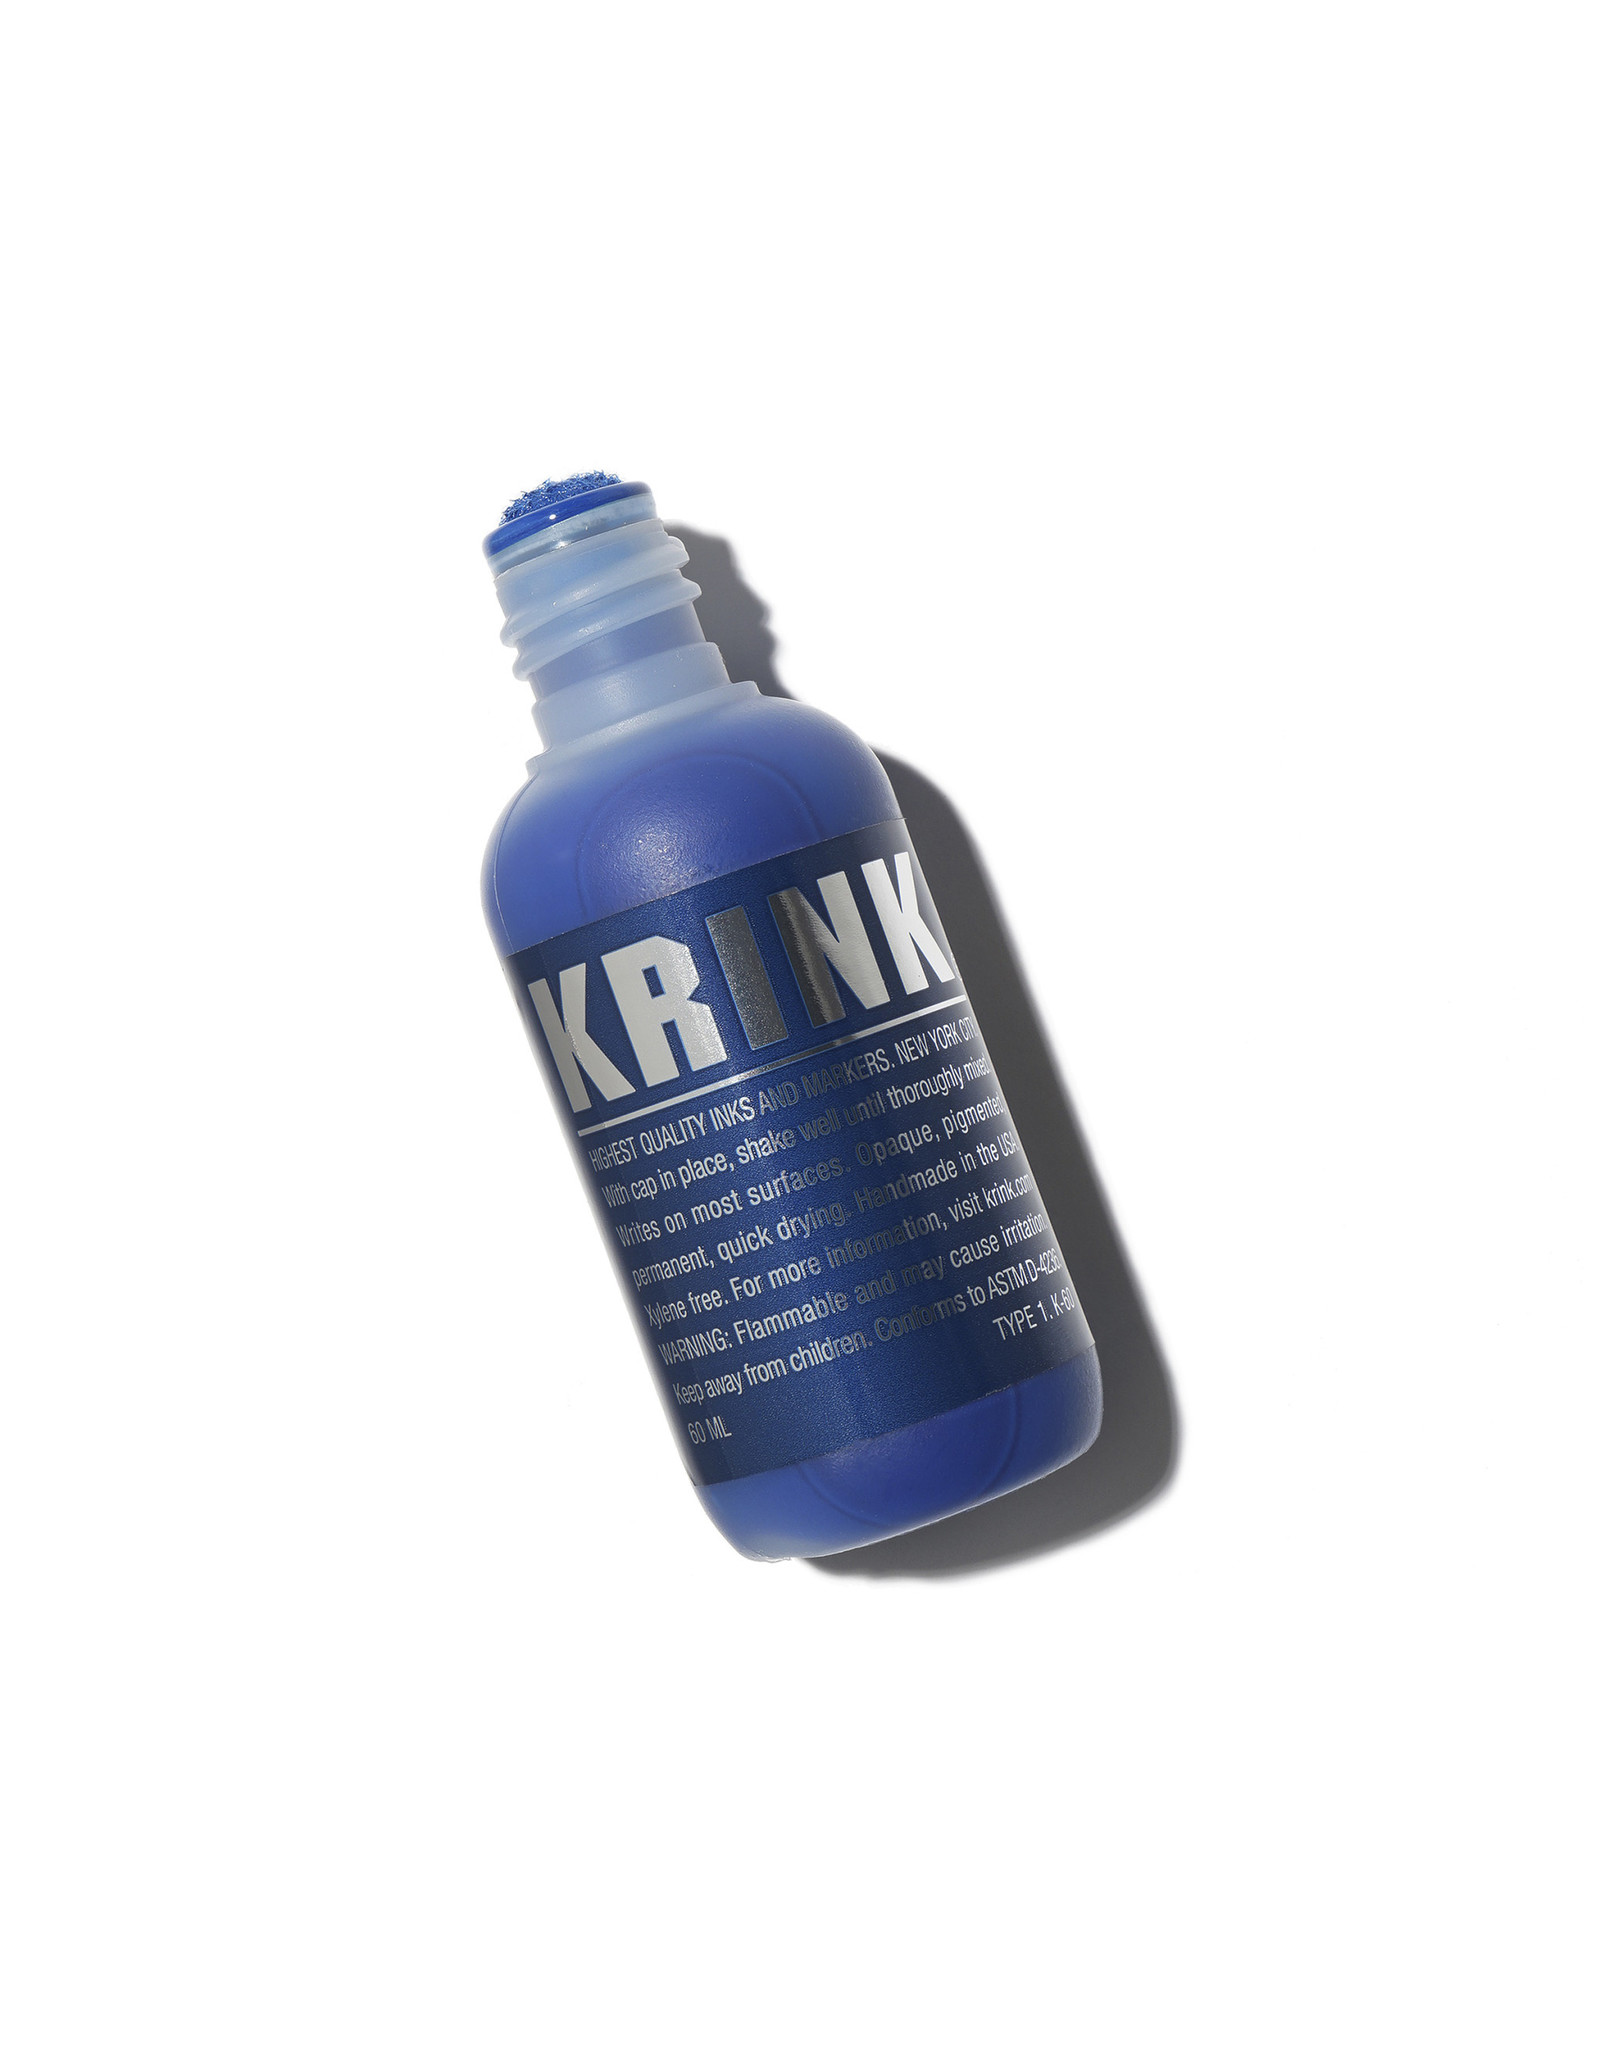 Krink Krink K-60 Paint Marker, Blue